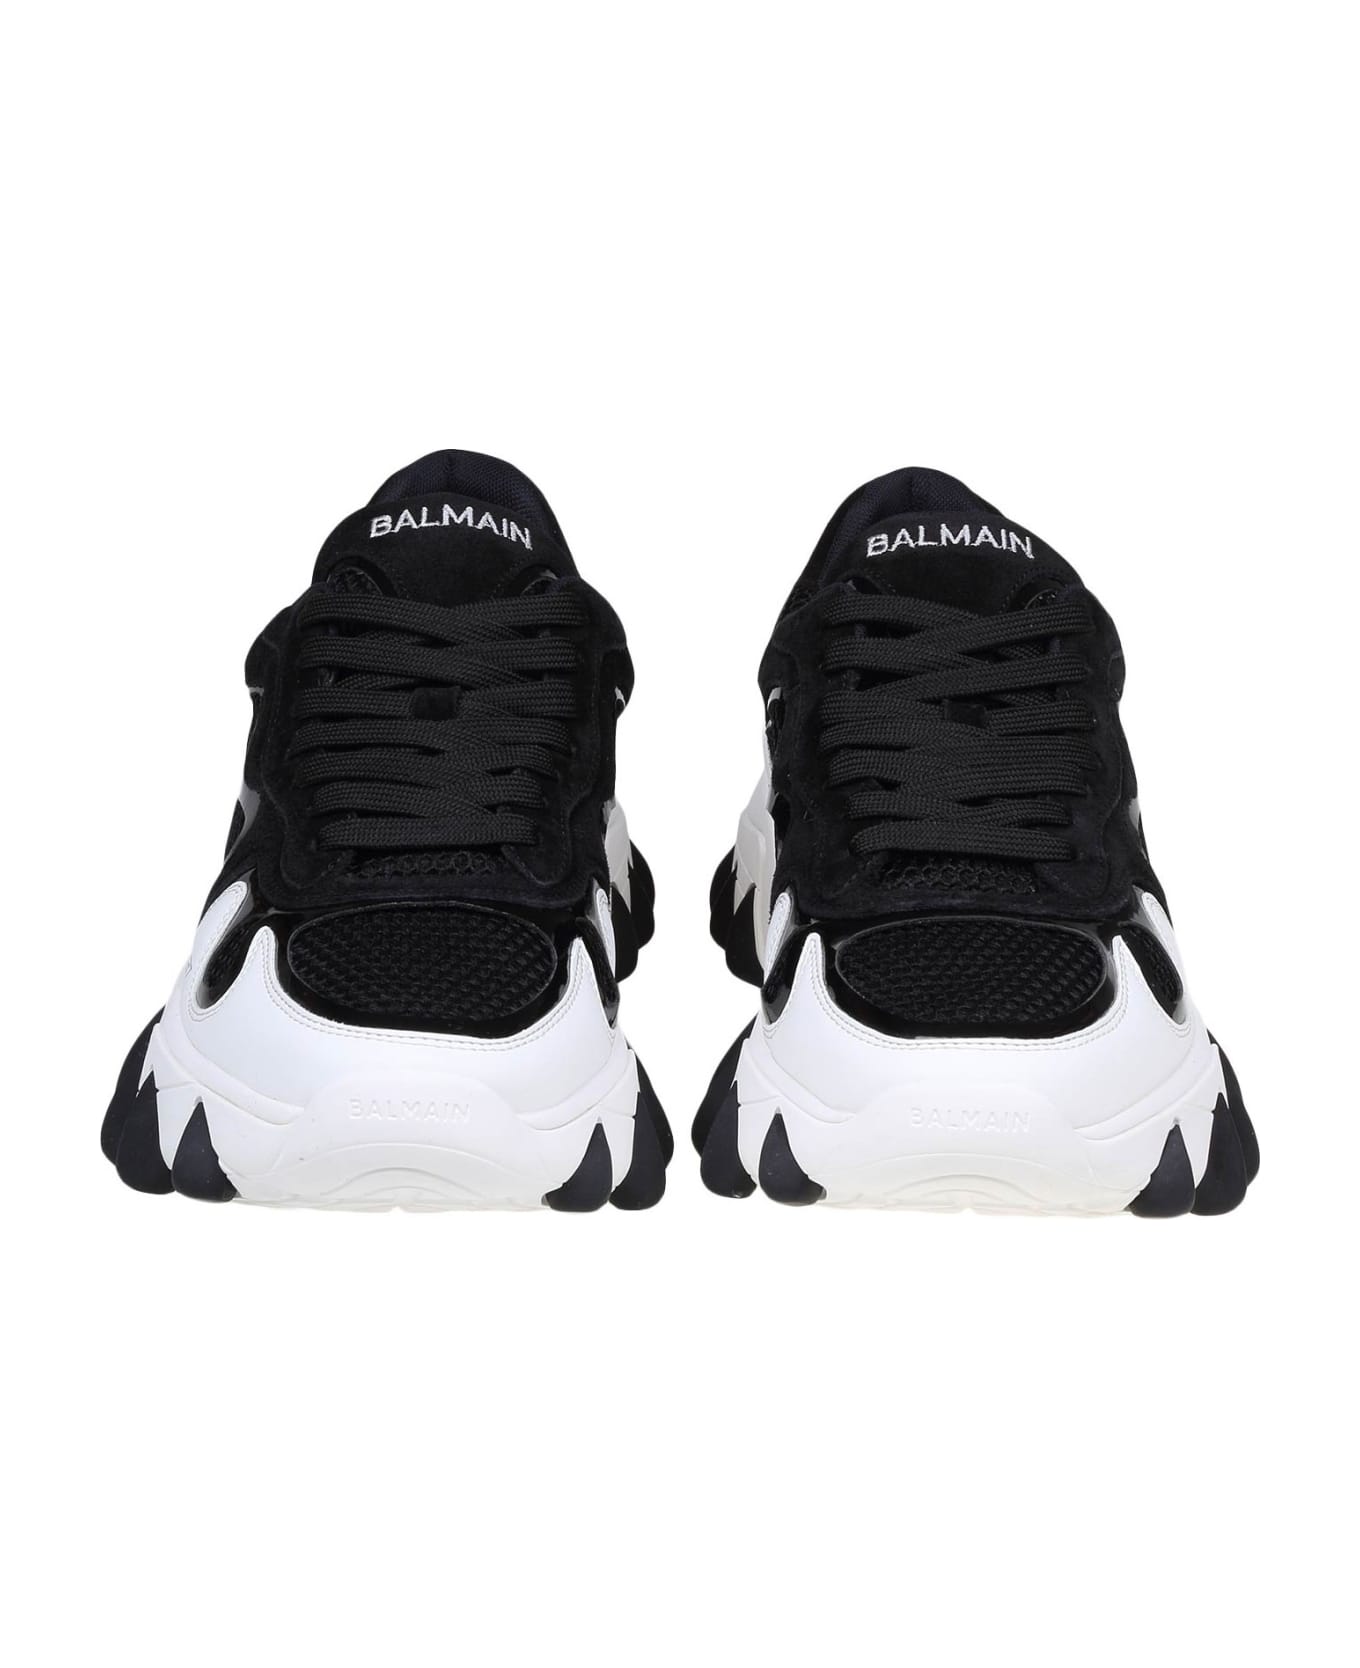 Balmain B-east Sneakers - Black /White